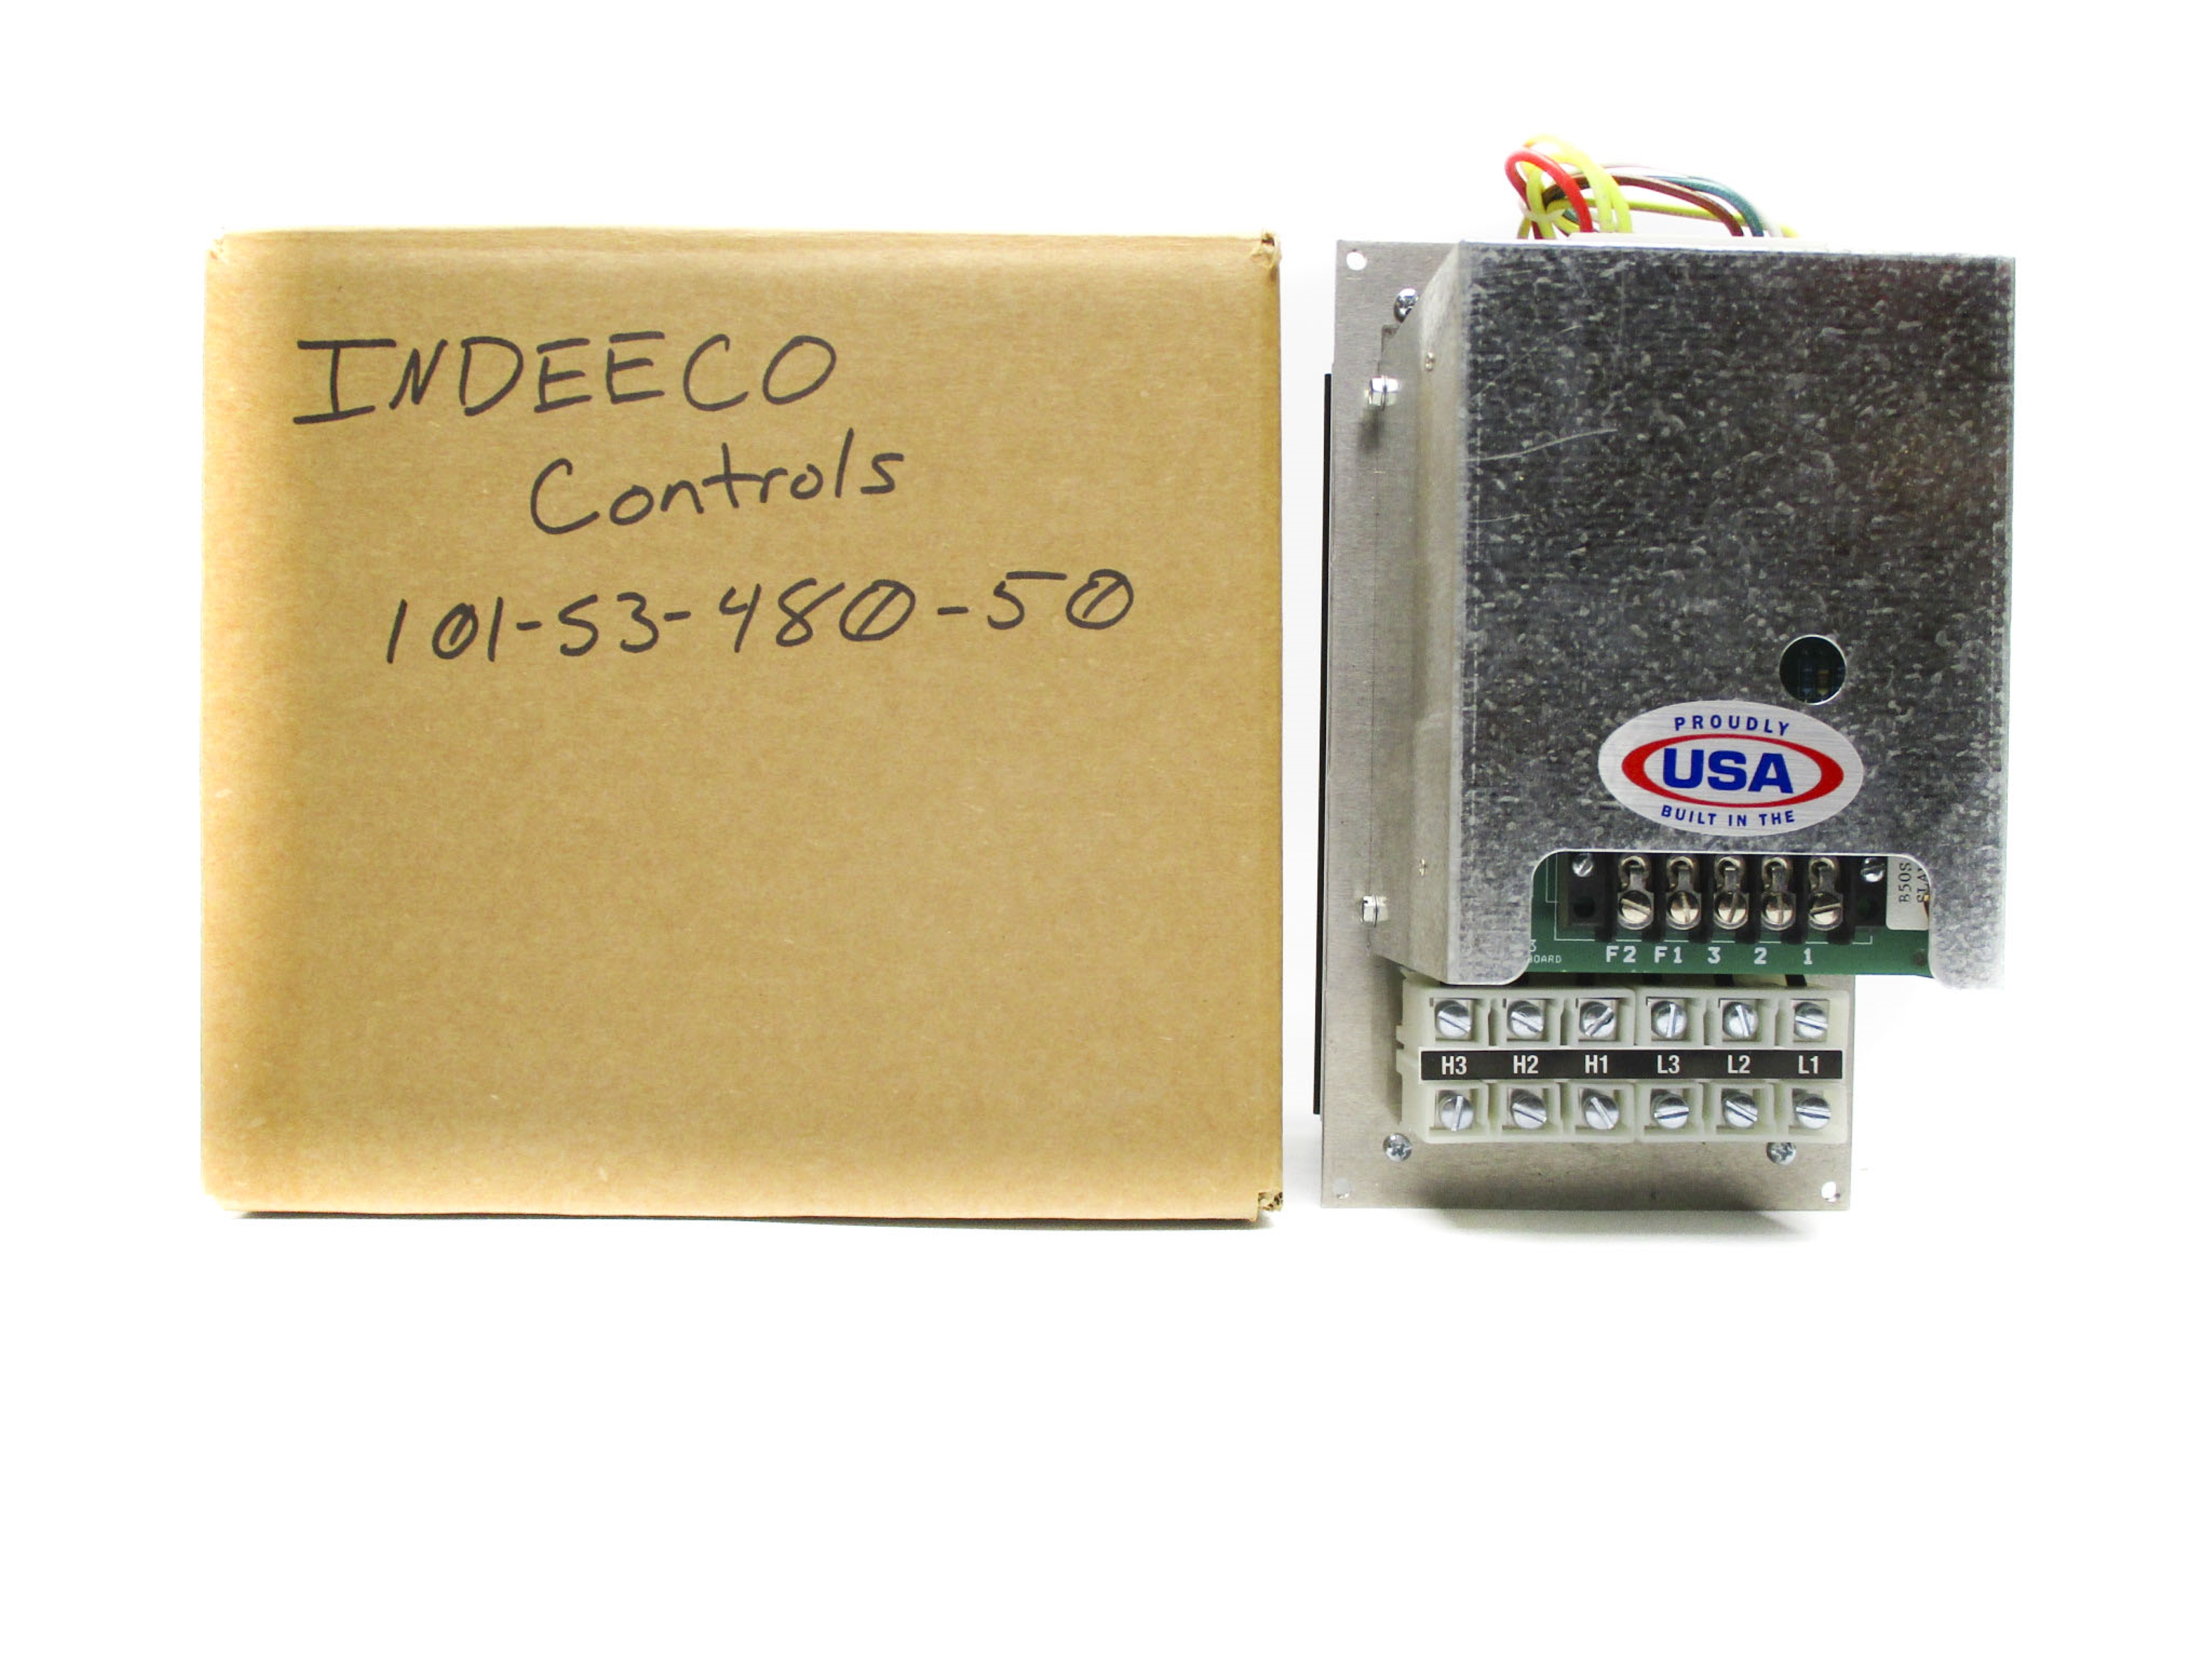 Indeeco Controls 101 S3 480 50 Nsnp Ebay